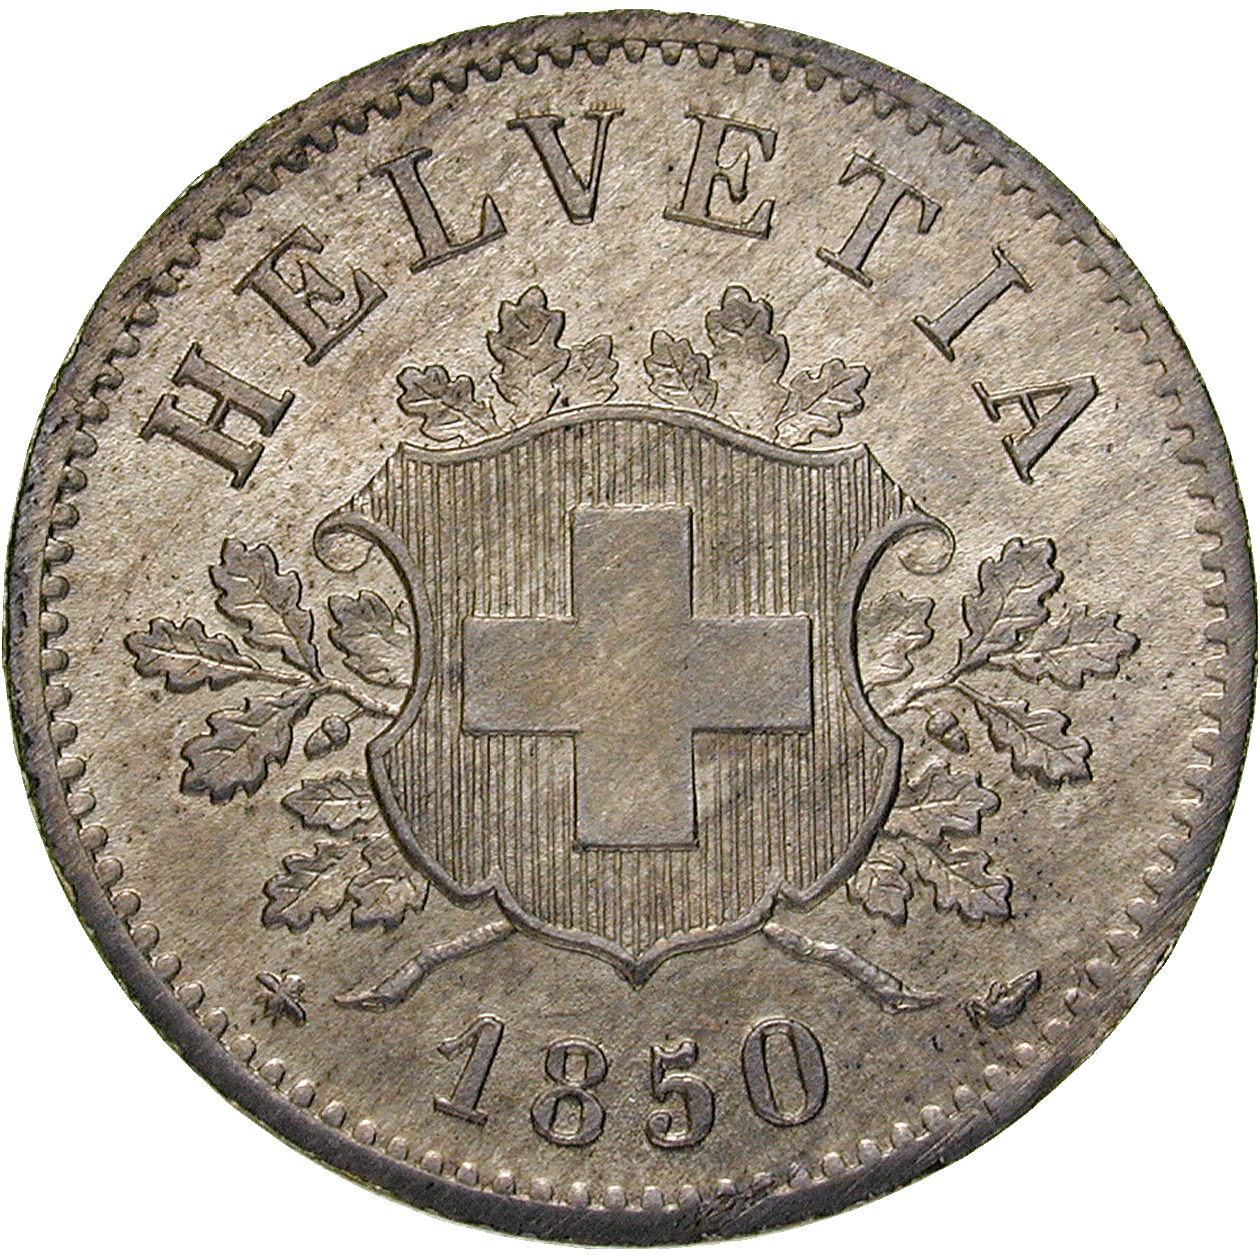 Swiss Confederation, 10 Rappen 1850 (obverse)